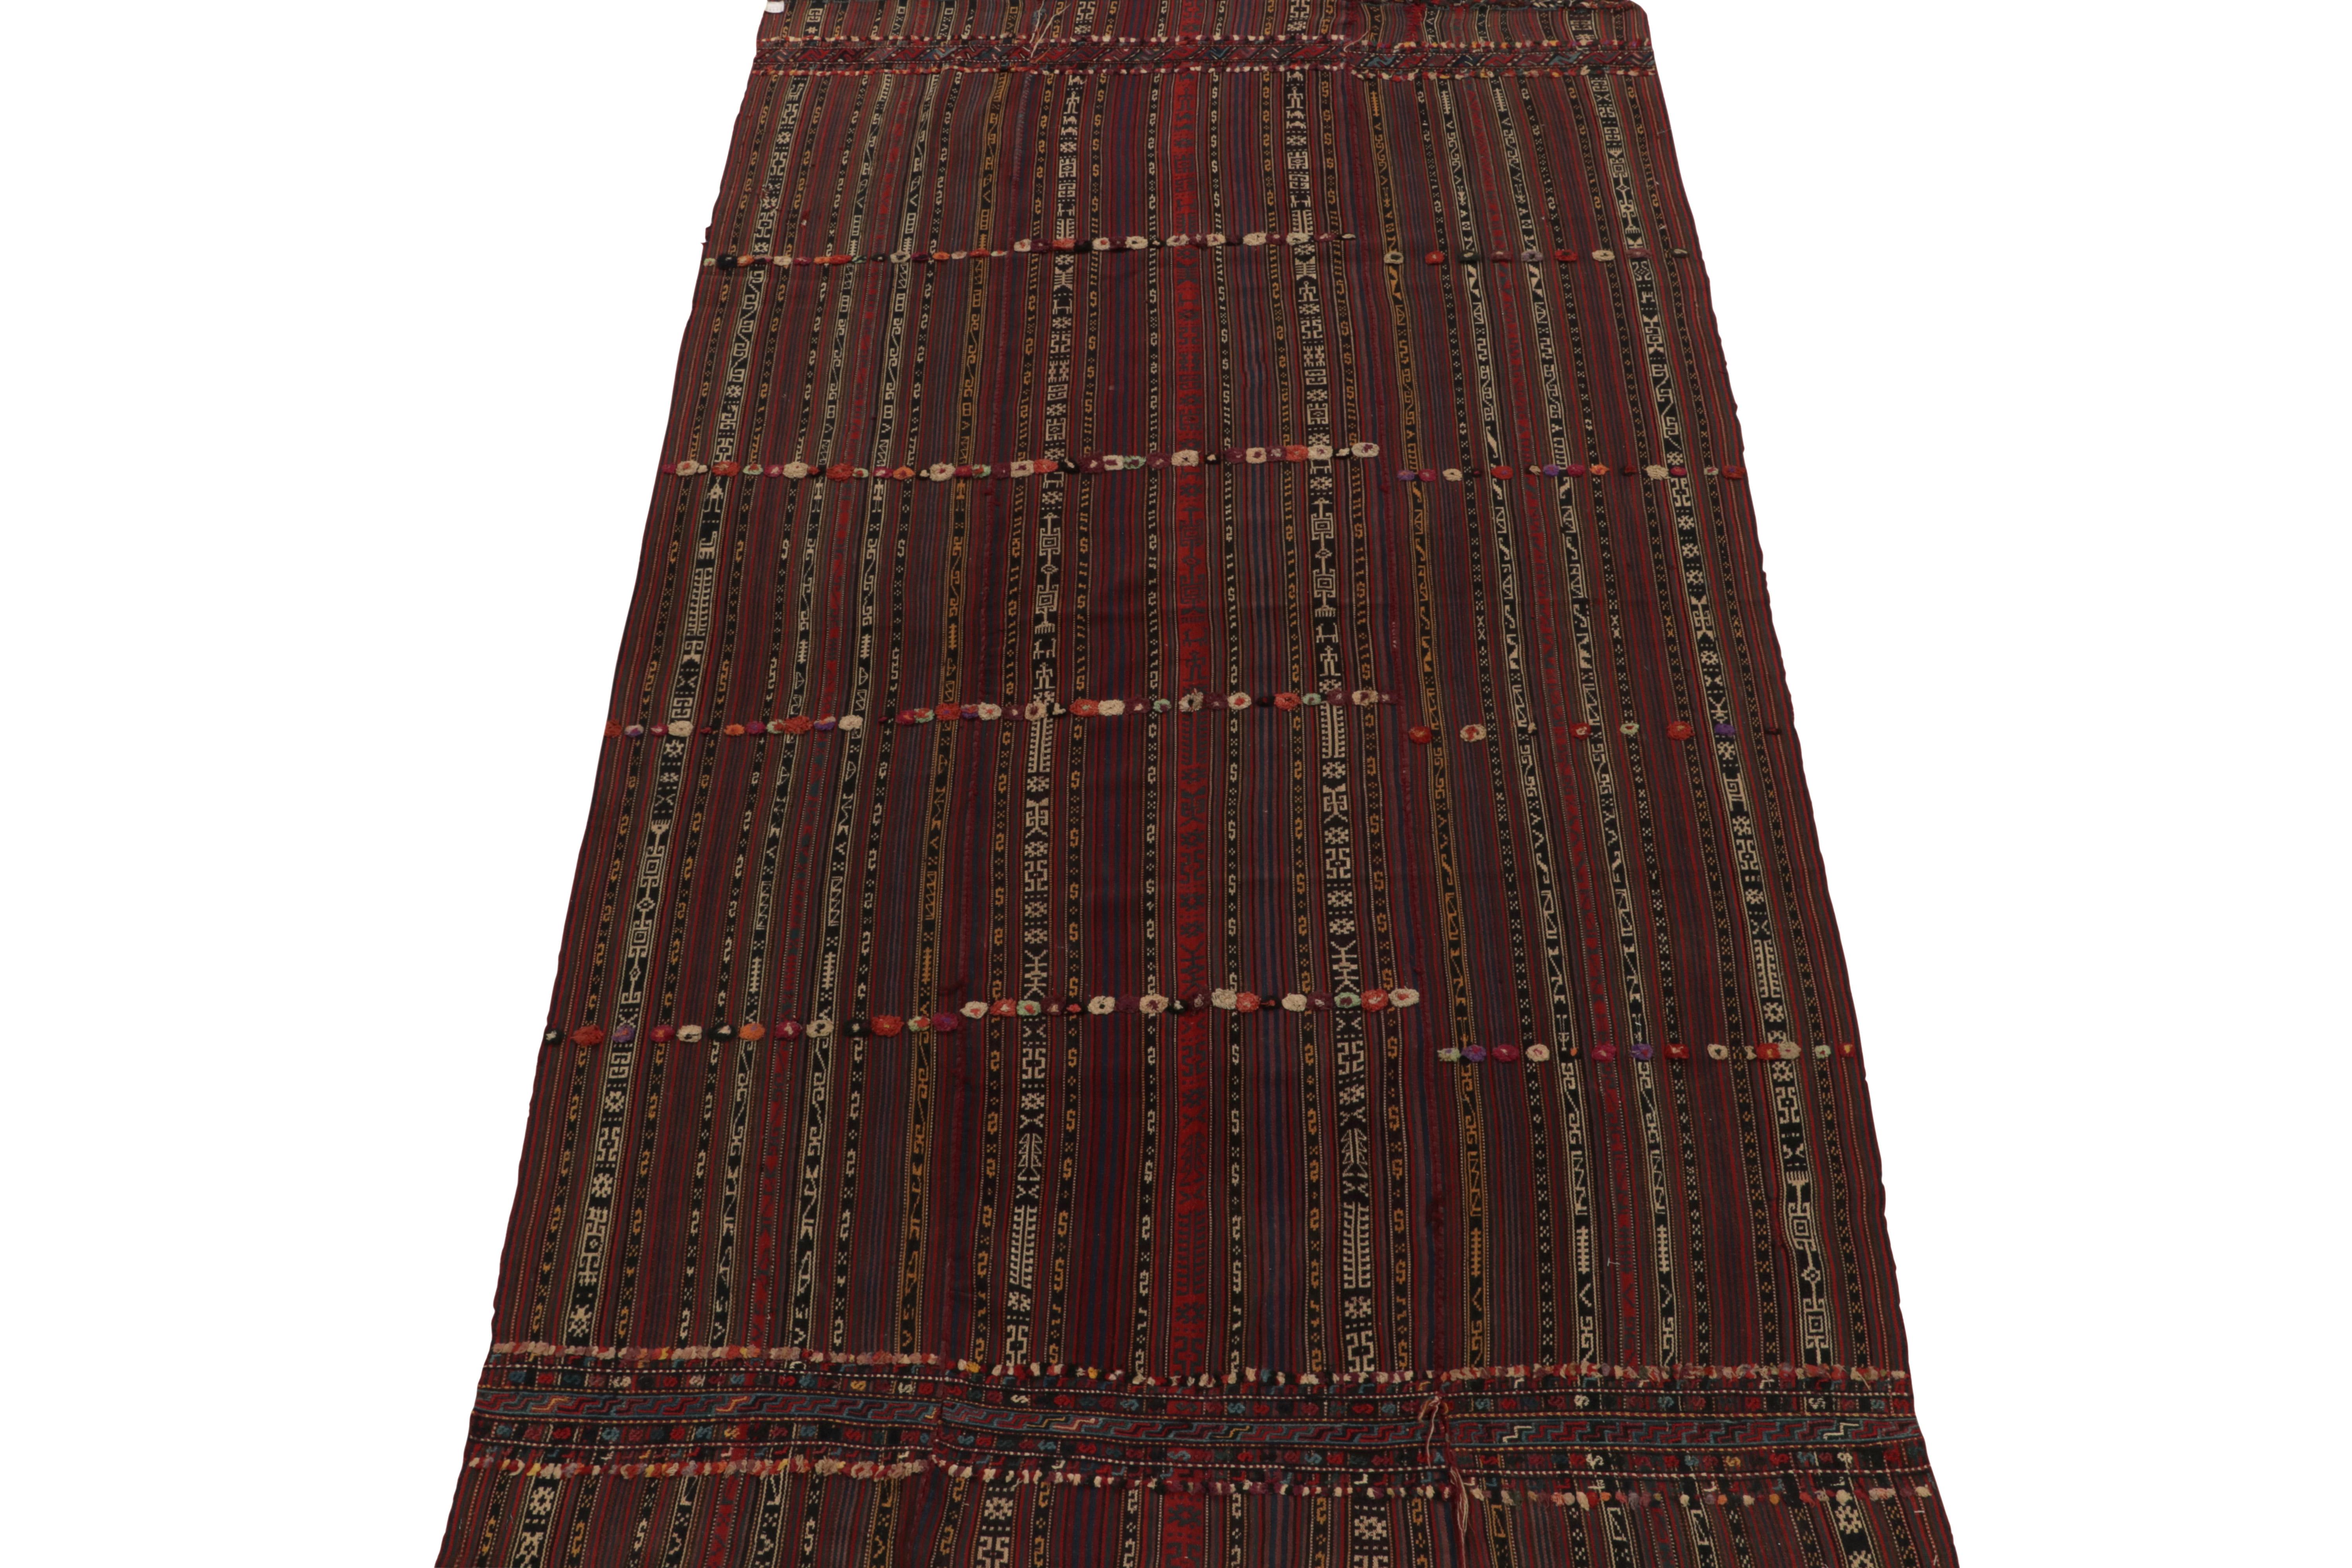 Tribal 1950s Vintage Persian Kilim Rug inRed & Brown Geometric Pattern by Rug & Kilim For Sale